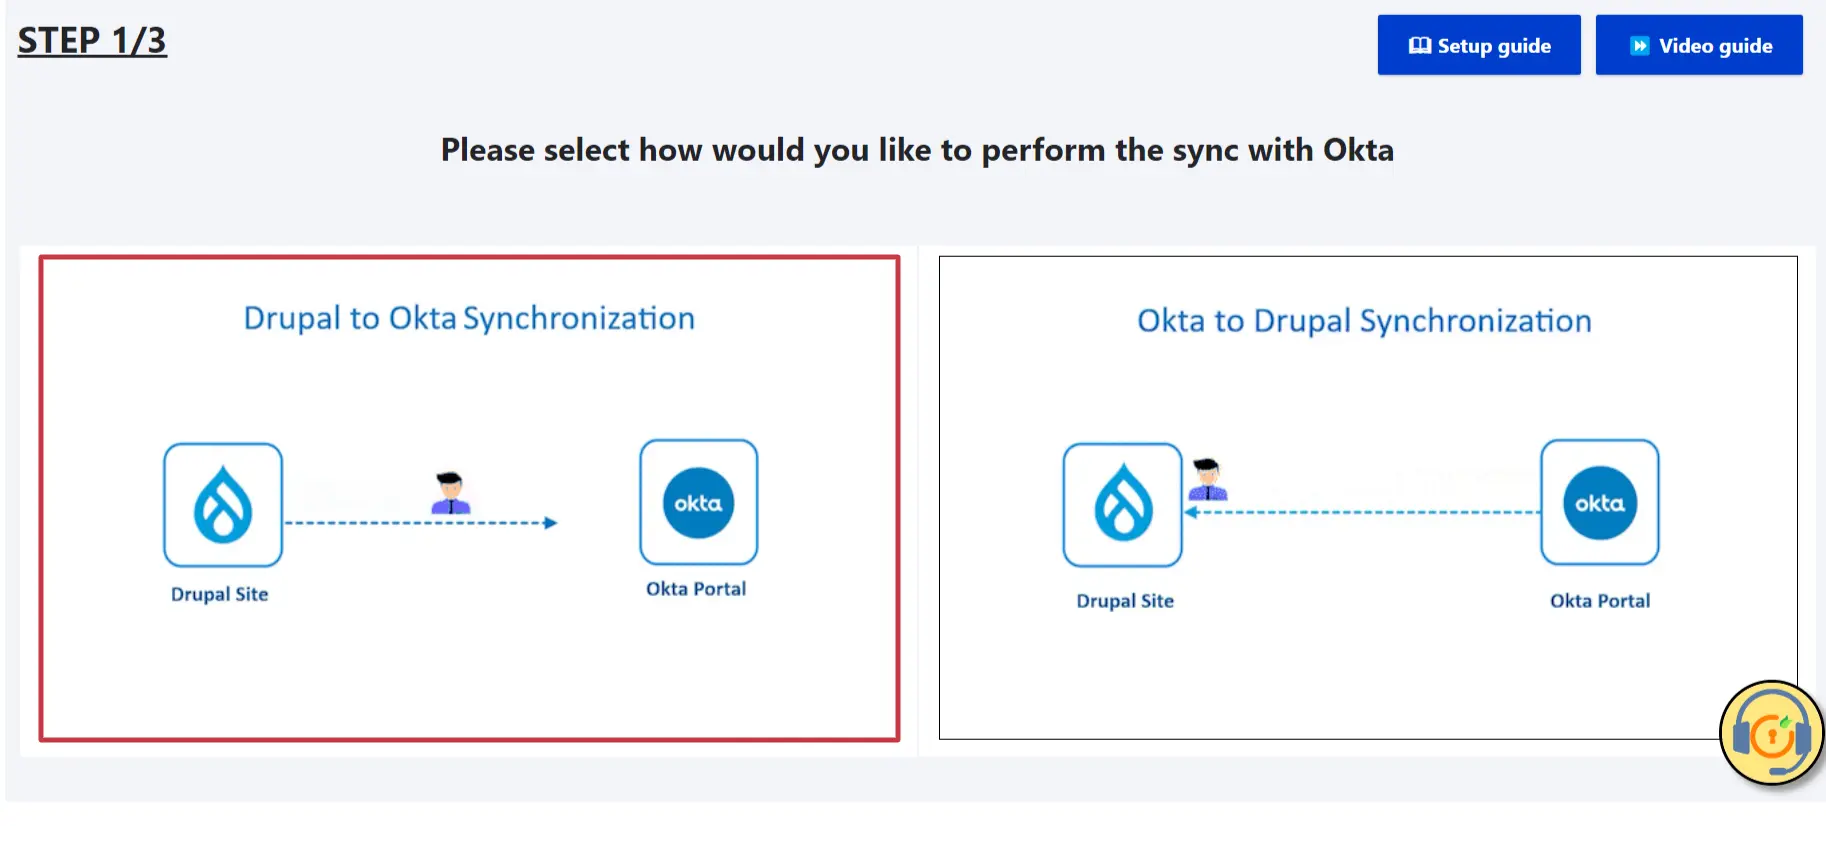  drupal okta user provisioning and sync - select drupal to okta synchronization